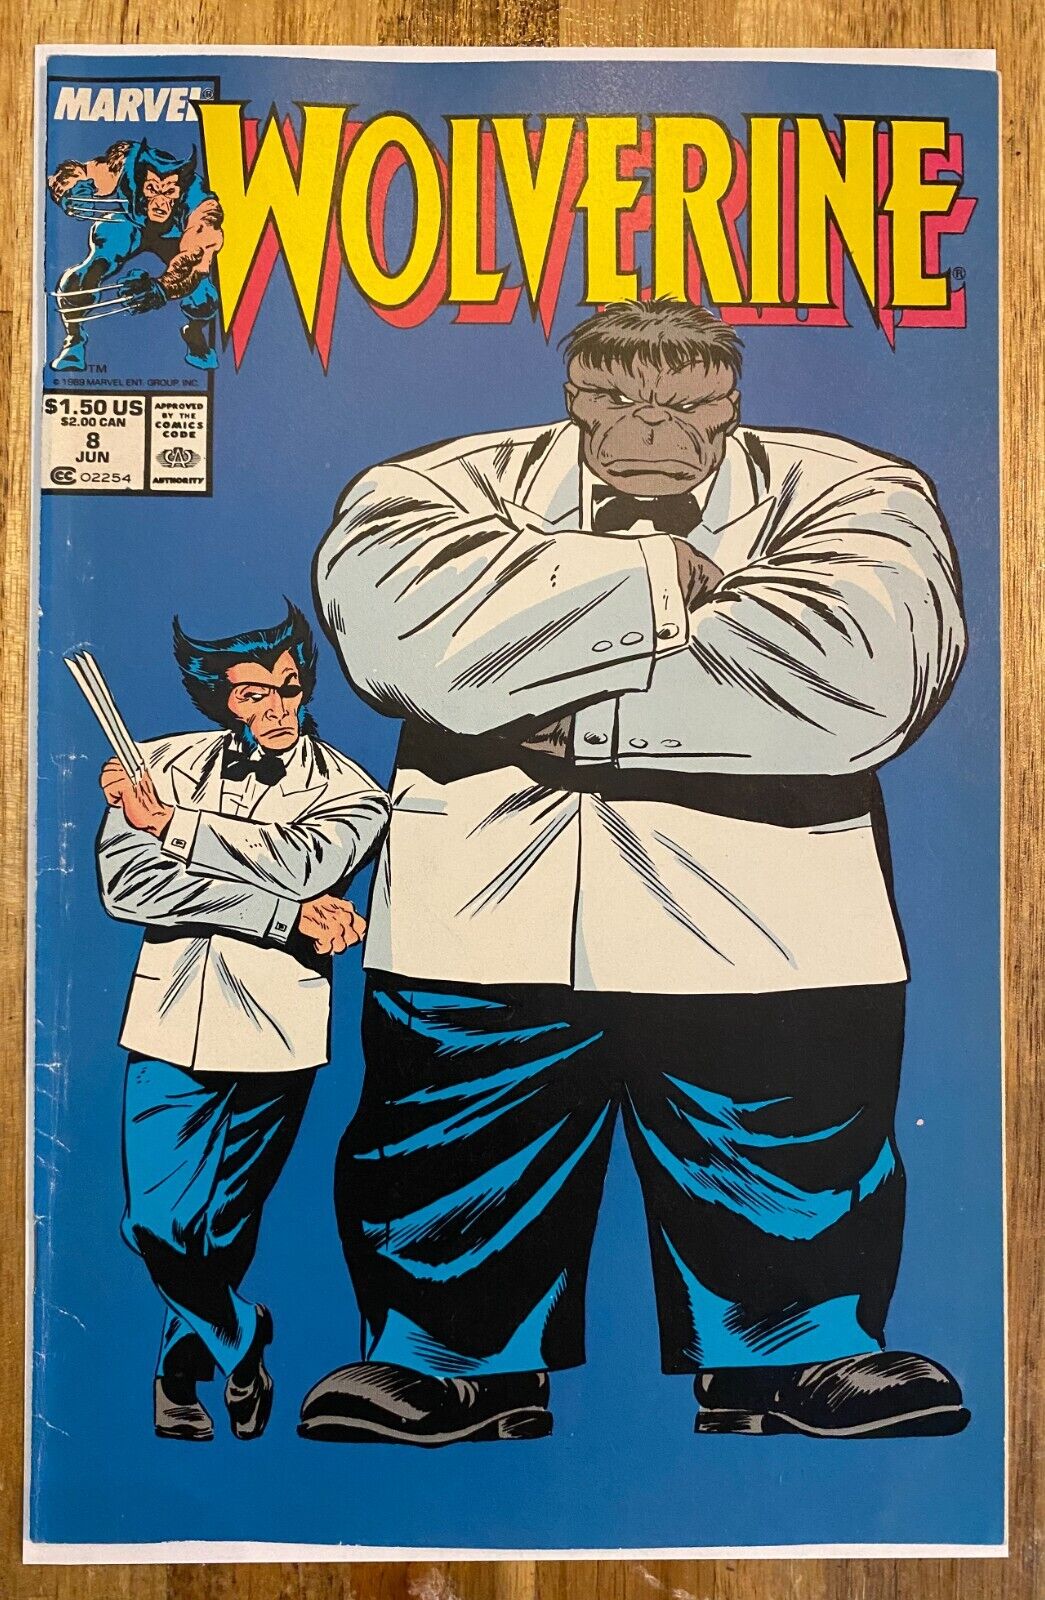 Wolverine #8 - Marvel Comics 1989 Classic Grey Hulk Joe Fixit Buscema Cover